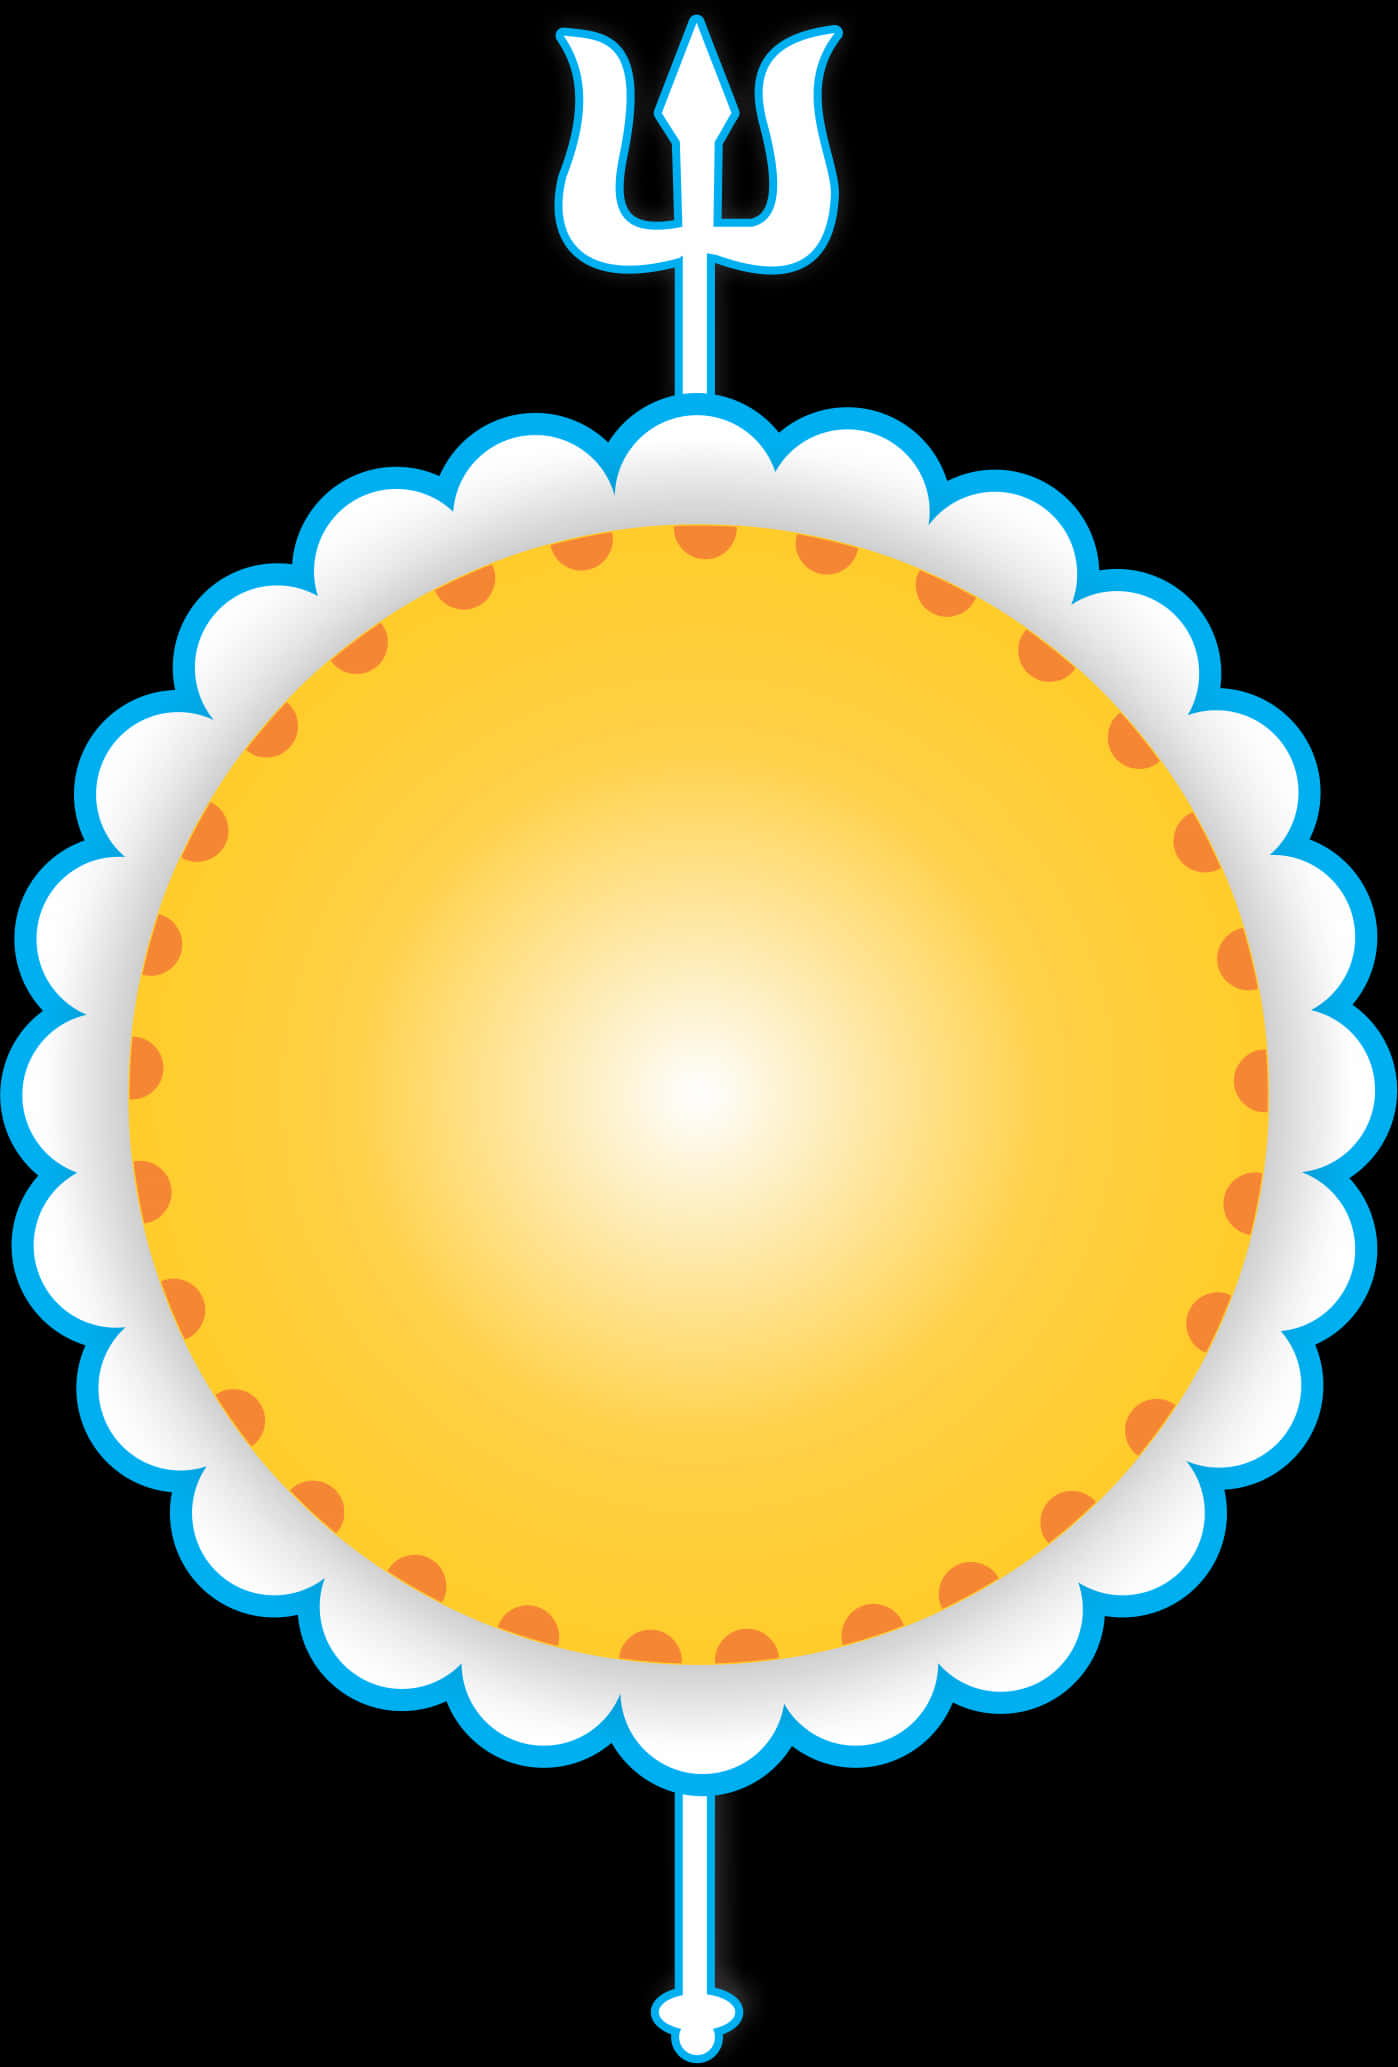 Trishul Emblem On Festive Background PNG